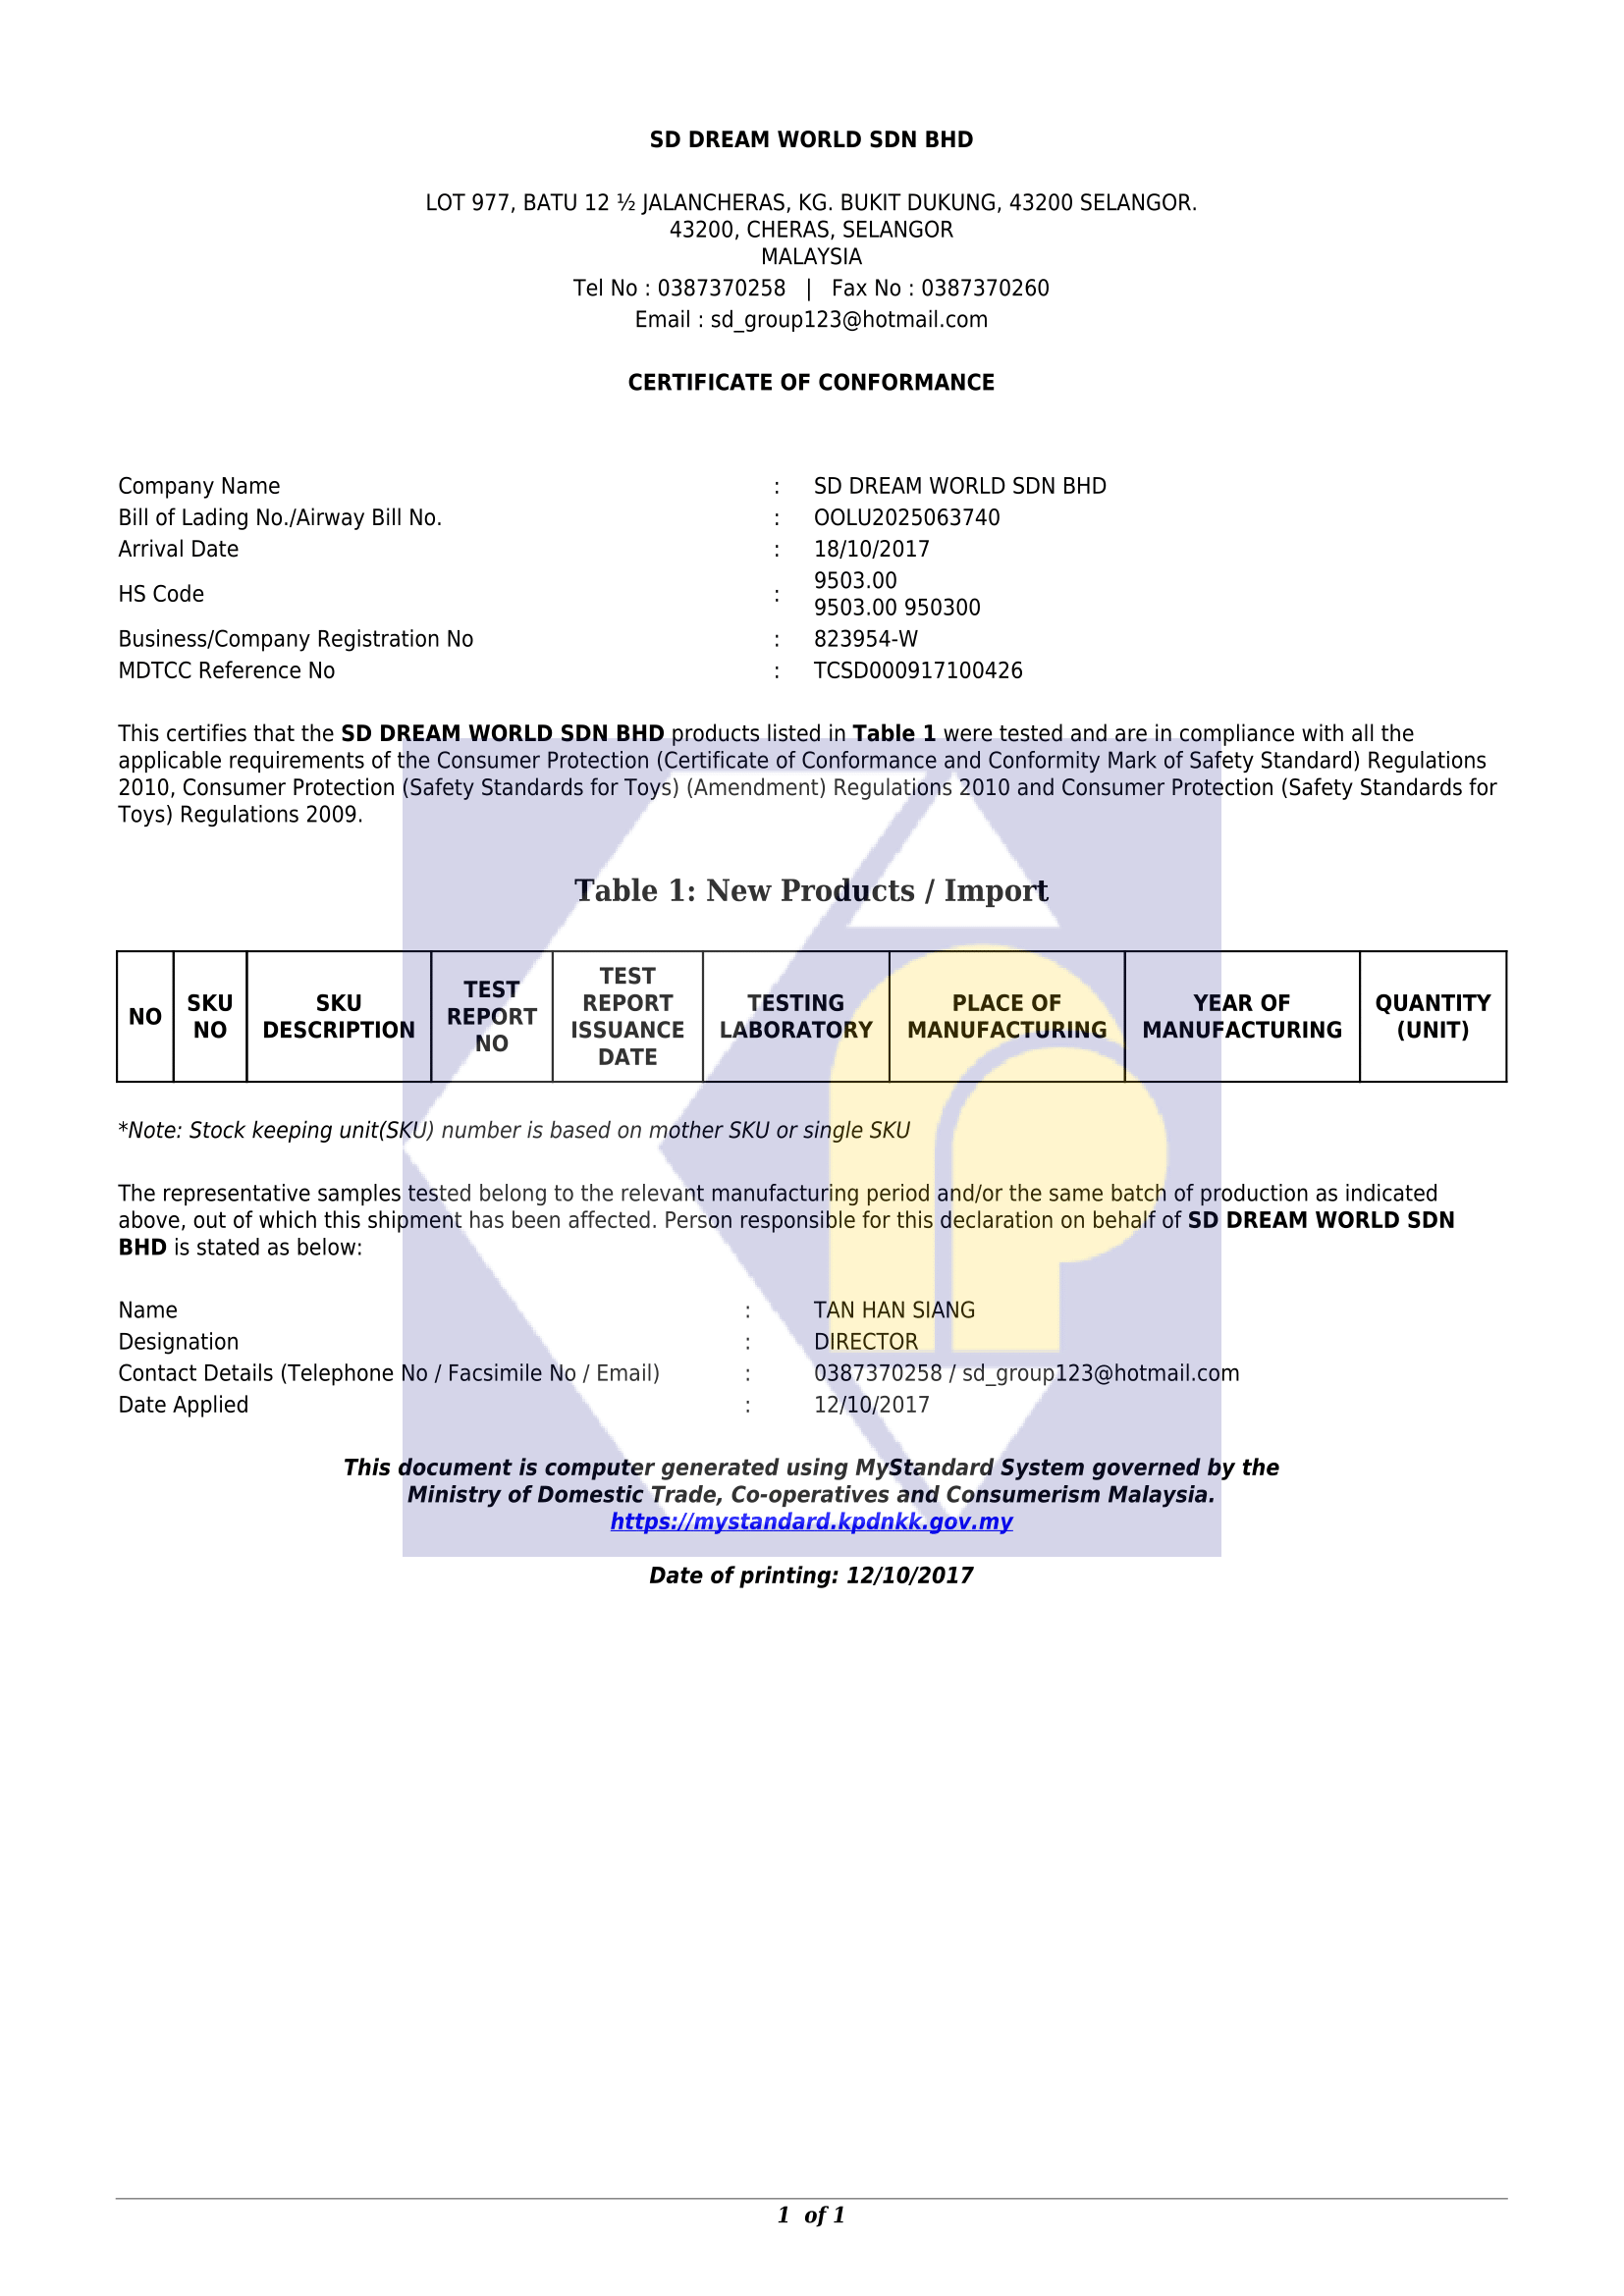 COC Certificate-1